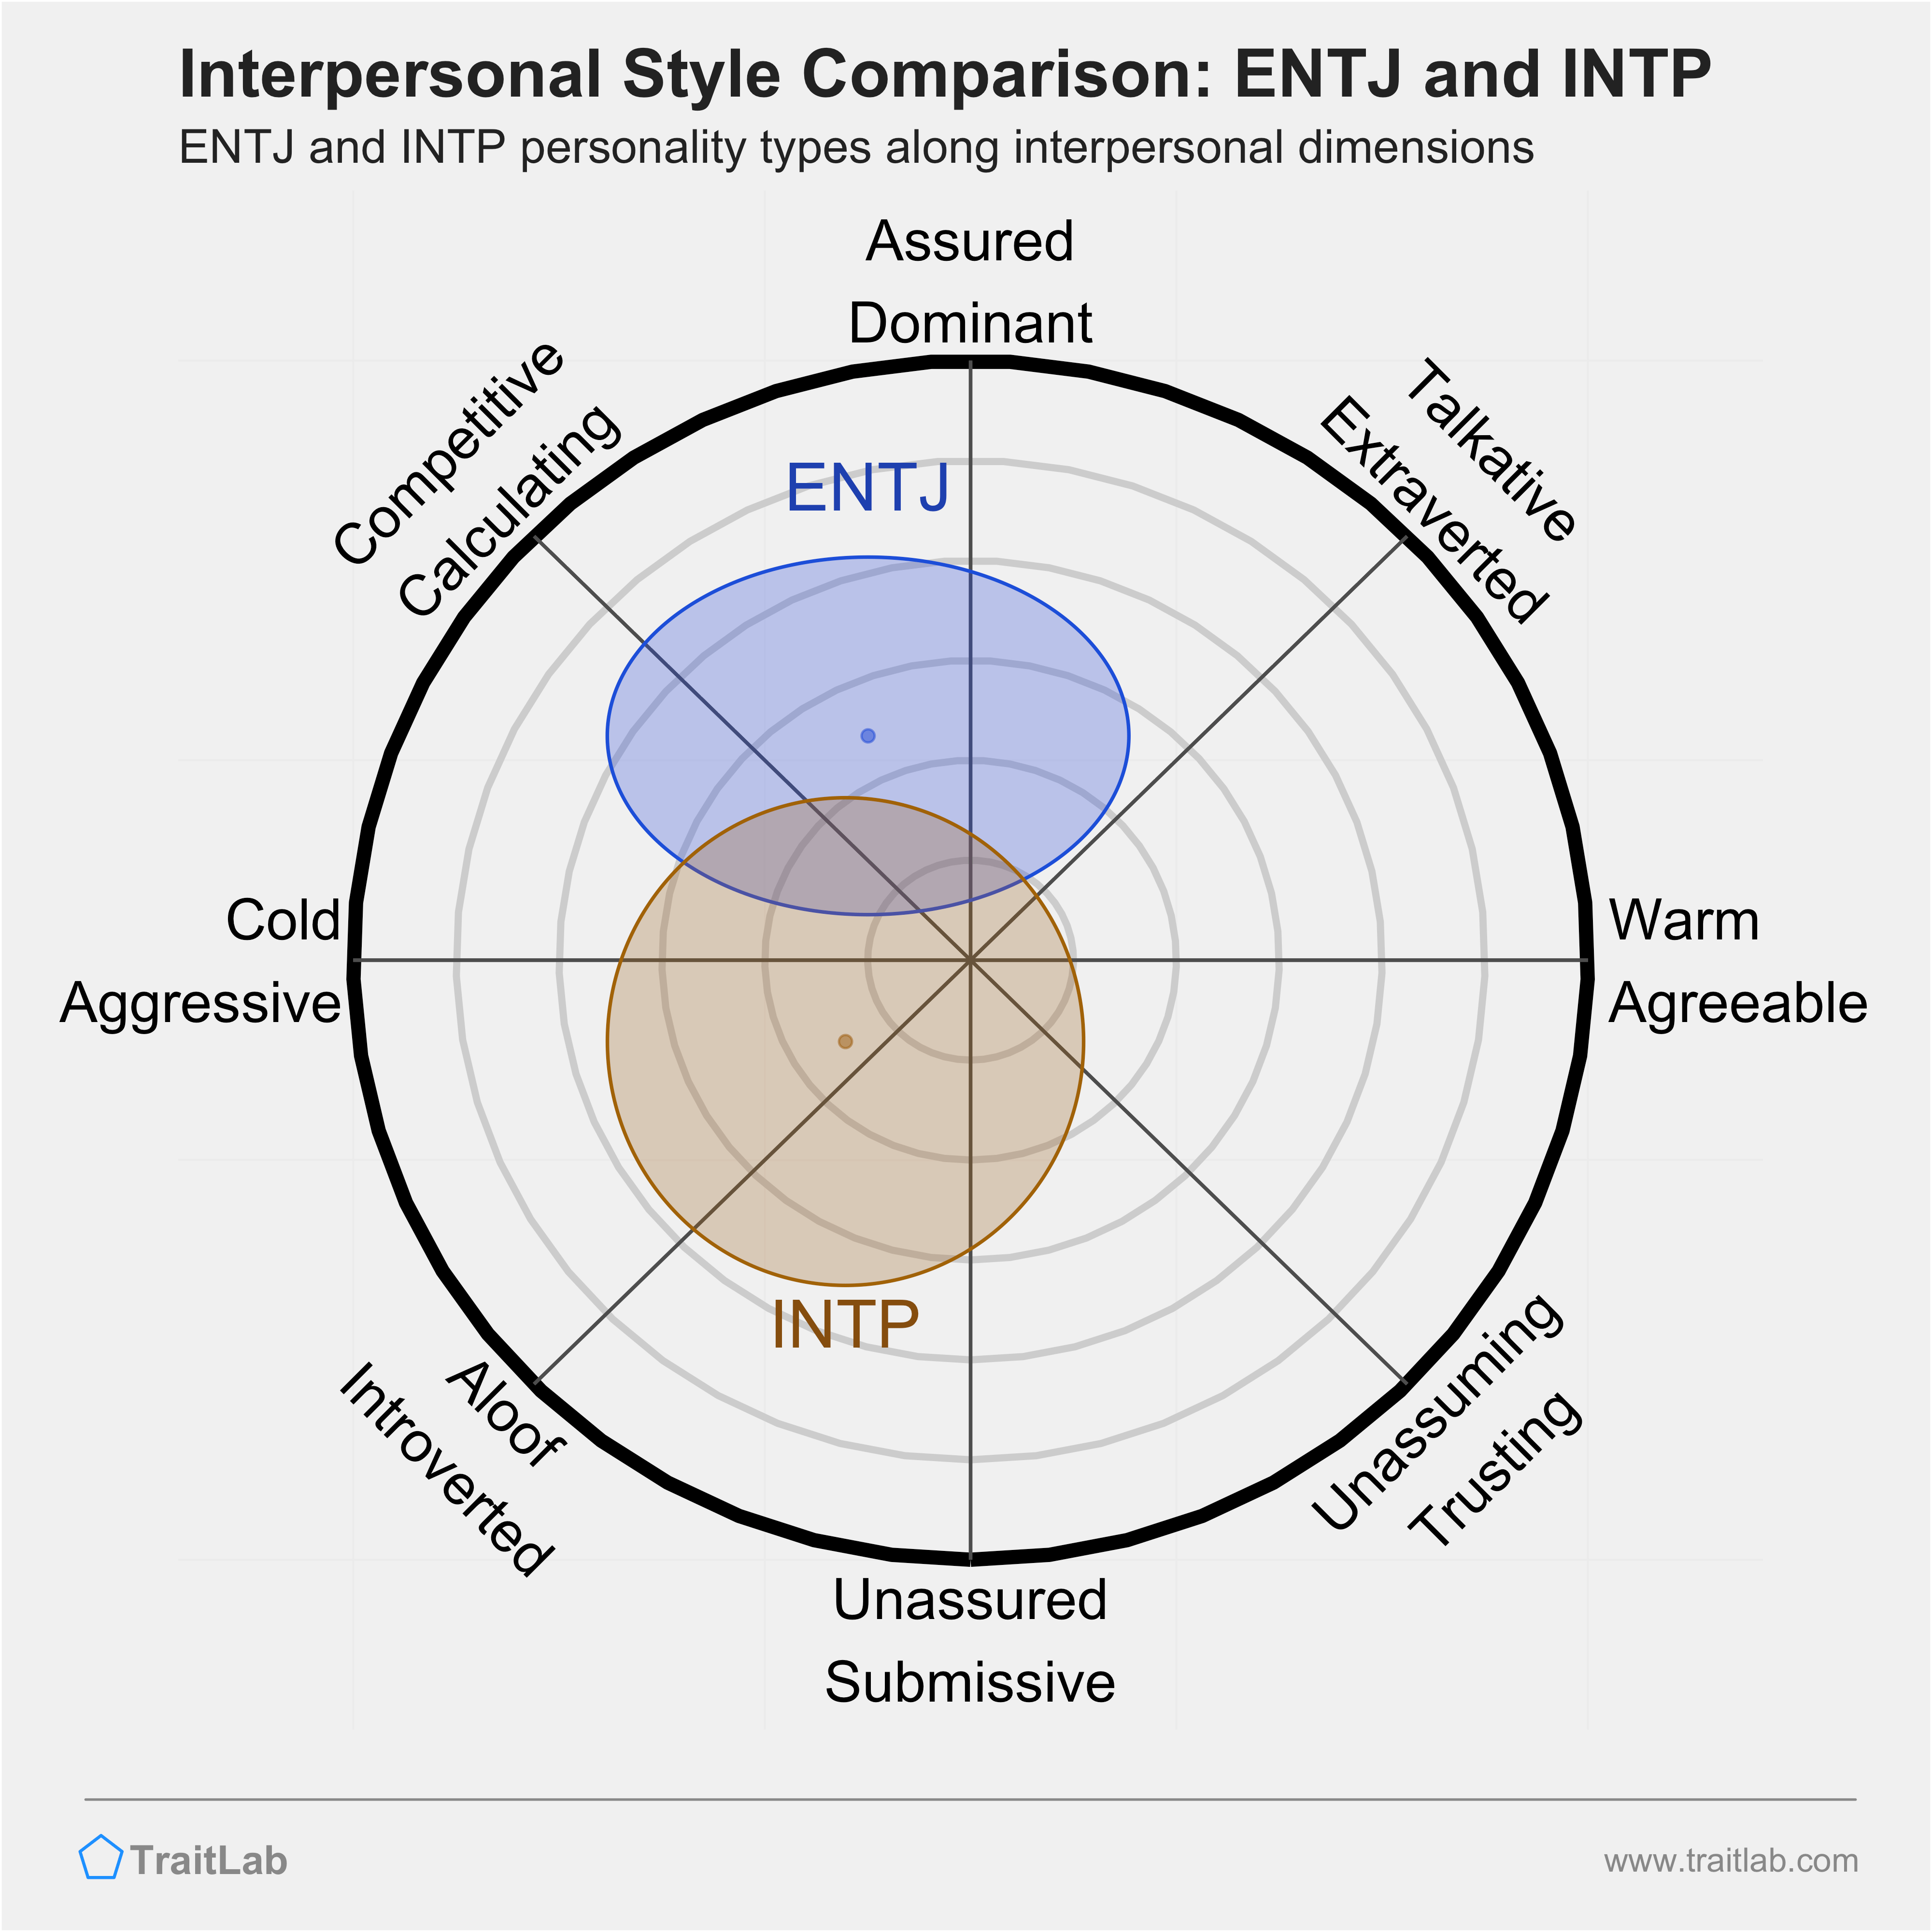 ENTJ and INTP comparison across interpersonal dimensions